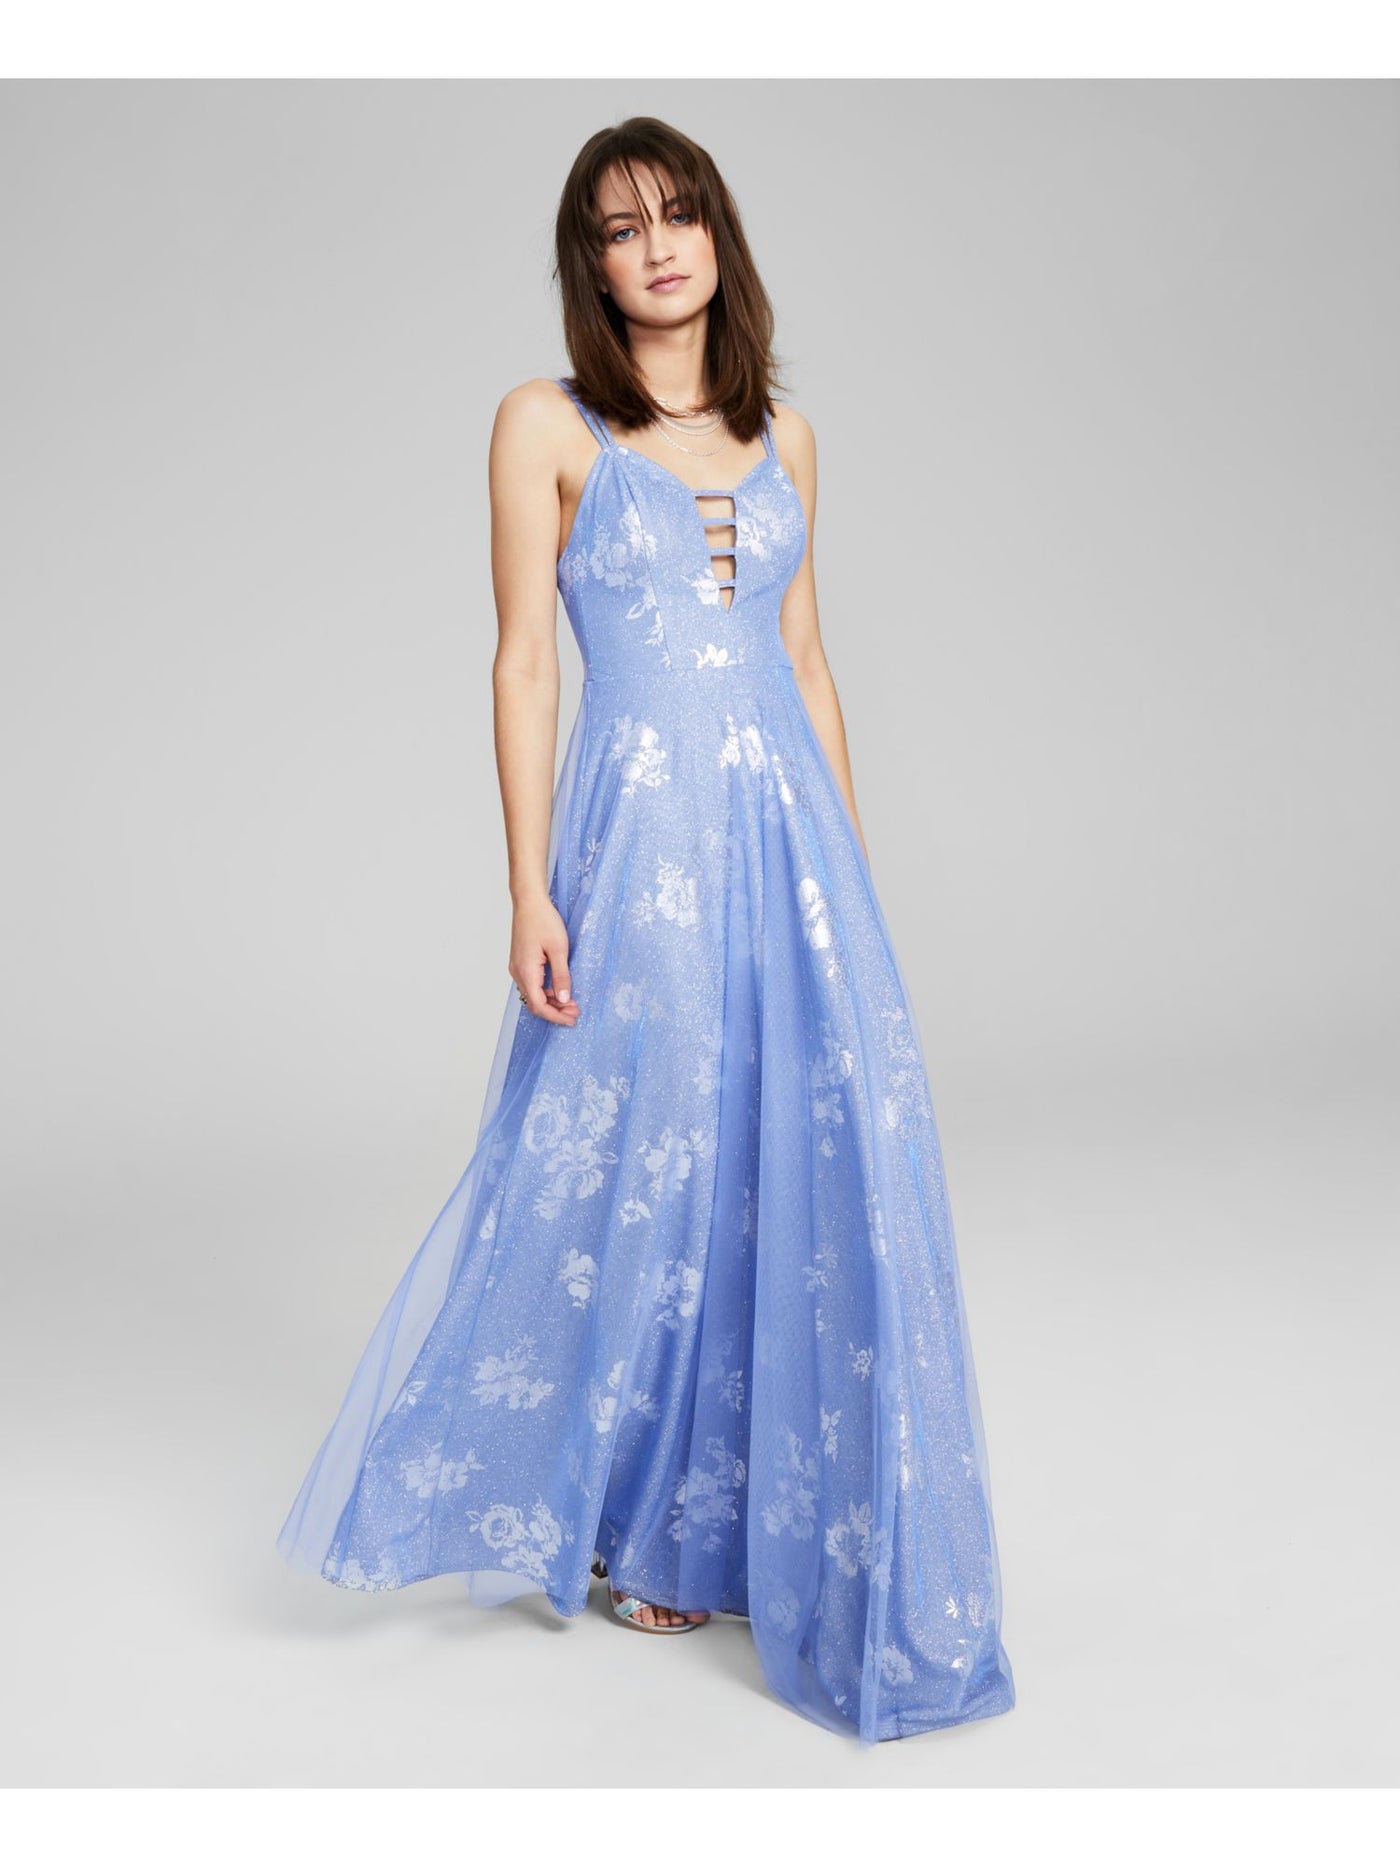 CITY STUDIO Womens Blue Glitter Zippered Strappy Detail Lined Floral Sleeveless V Neck Full-Length Prom Gown Dress Juniors 3